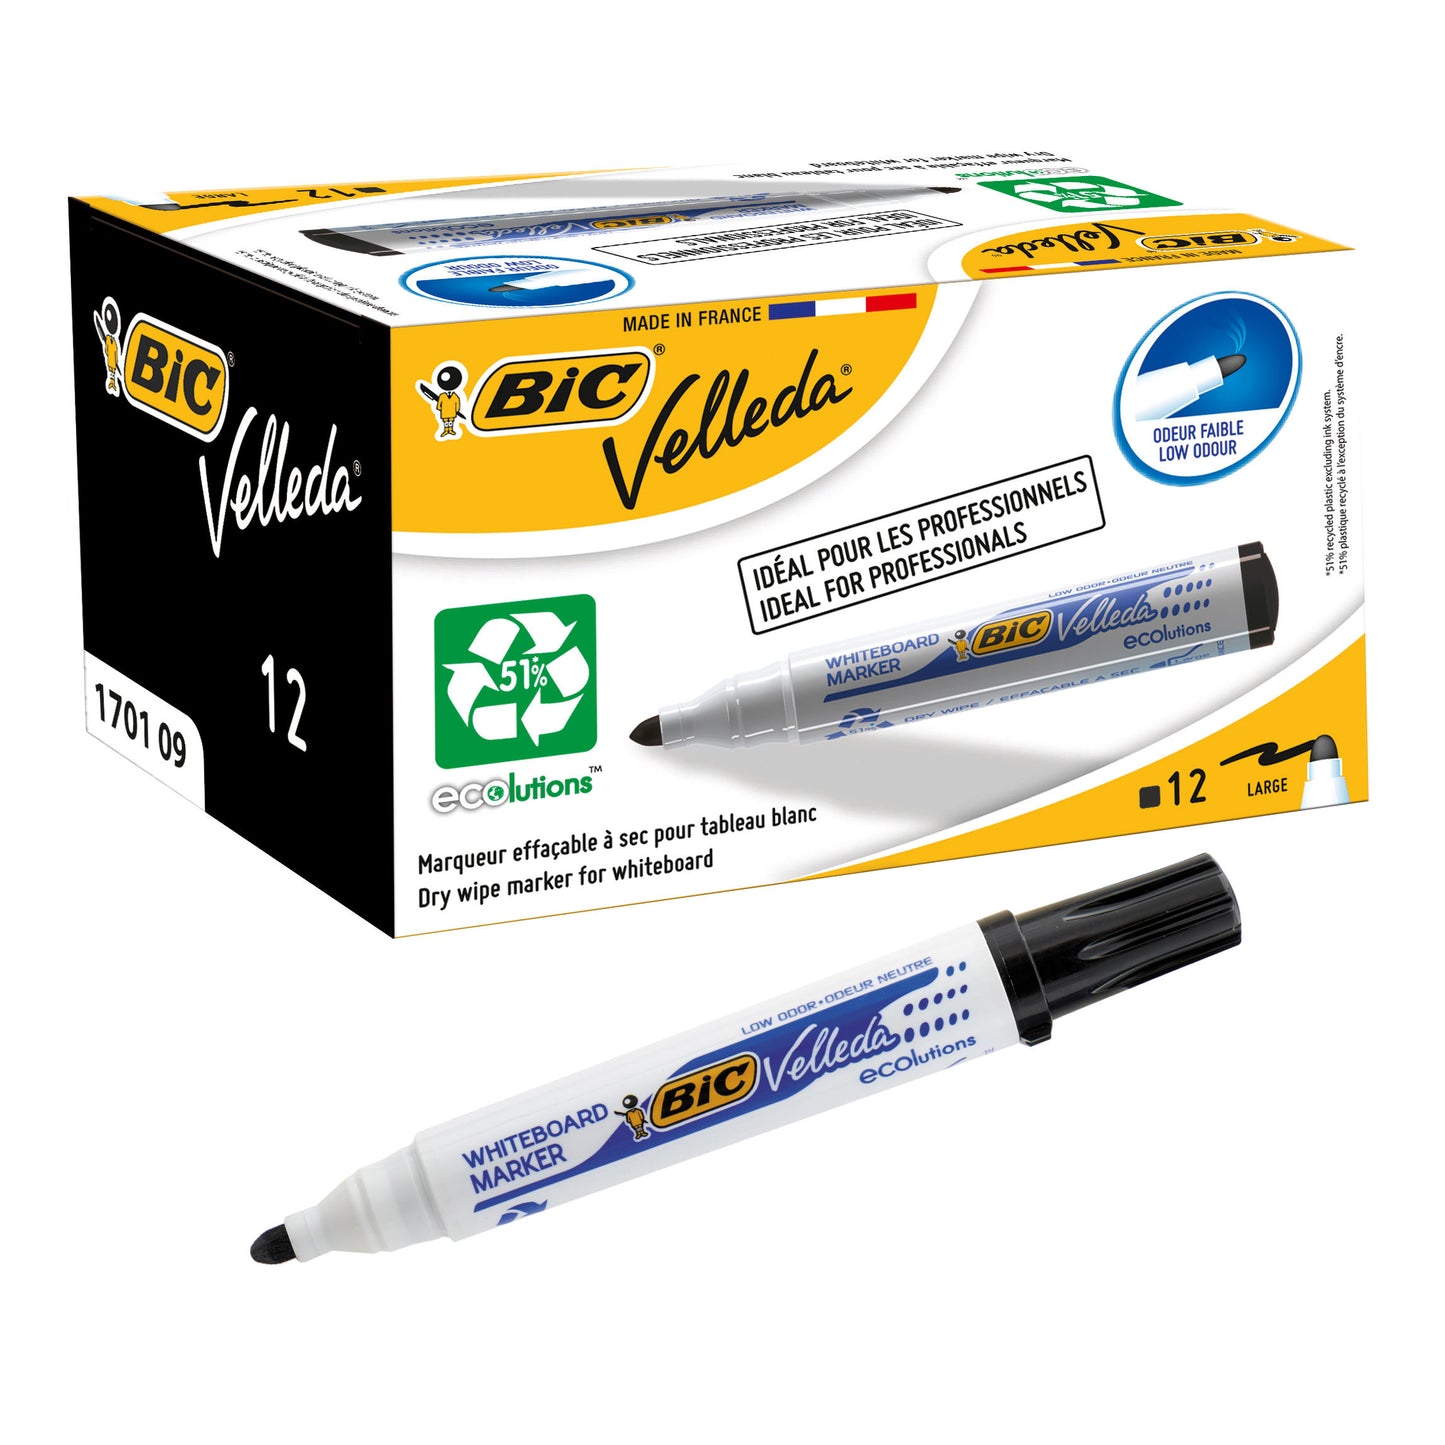 BIC Velleda Whiteboard Marker 1701 Bullet Black pack of 12